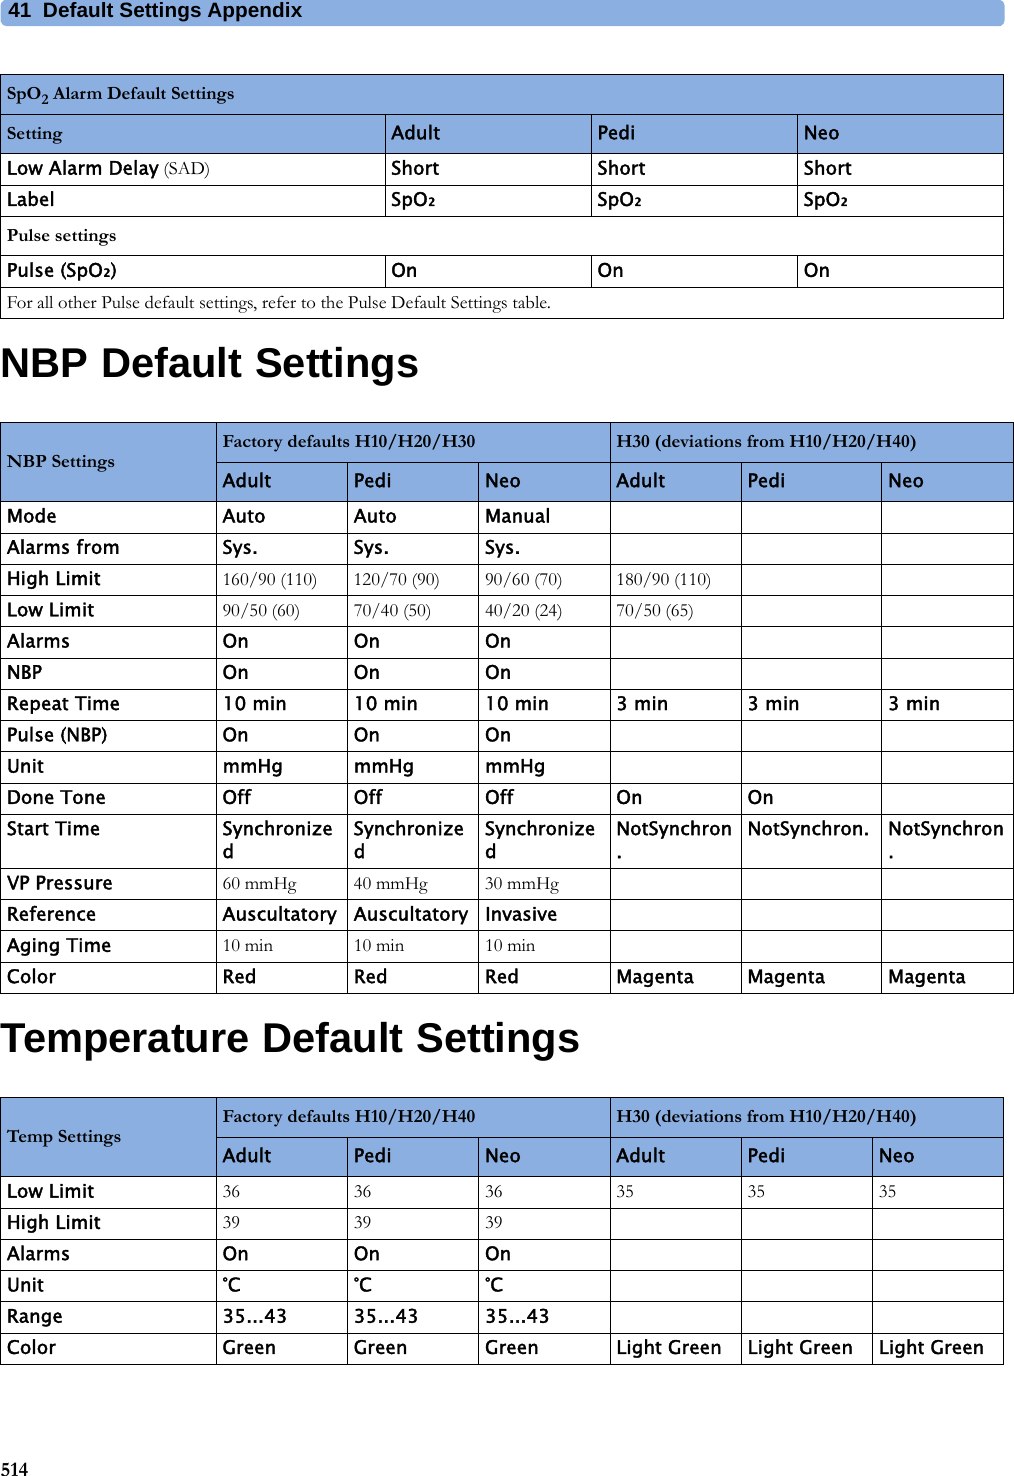 41 Default Settings Appendix514NBP Default SettingsTemperature Default SettingsLow Alarm Delay (SAD) Short Short ShortLabel SpO₂SpO₂SpO₂Pulse settingsPulse (SpO₂) OnOnOnFor all other Pulse default settings, refer to the Pulse Default Settings table.SpO2 Alarm Default SettingsSetting Adult Pedi NeoNBP SettingsFactory defaults H10/H20/H30 H30 (deviations from H10/H20/H40)Adult Pedi Neo Adult Pedi NeoMode Auto Auto ManualAlarms from Sys. Sys. Sys.High Limit 160/90 (110) 120/70 (90) 90/60 (70) 180/90 (110)Low Limit 90/50 (60) 70/40 (50) 40/20 (24) 70/50 (65)Alarms On On OnNBP OnOnOnRepeat Time 10 min 10 min 10 min 3 min 3 min 3 minPulse (NBP) OnOnOnUnit mmHg mmHg mmHgDone Tone Off Off Off On OnStart Time SynchronizedSynchronizedSynchronizedNotSynchron.NotSynchron. NotSynchron.VP Pressure 60 mmHg 40 mmHg 30 mmHgReference Auscultatory Auscultatory InvasiveAging Time 10 min 10 min 10 minColor Red Red Red Magenta Magenta MagentaTemp SettingsFactory defaults H10/H20/H40 H30 (deviations from H10/H20/H40)Adult Pedi Neo Adult Pedi NeoLow Limit 36 36 36 35 35 35High Limit 39 39 39Alarms On On OnUnit °C °C °CRange 35...43 35...43 35...43Color Green Green Green Light Green Light Green Light Green